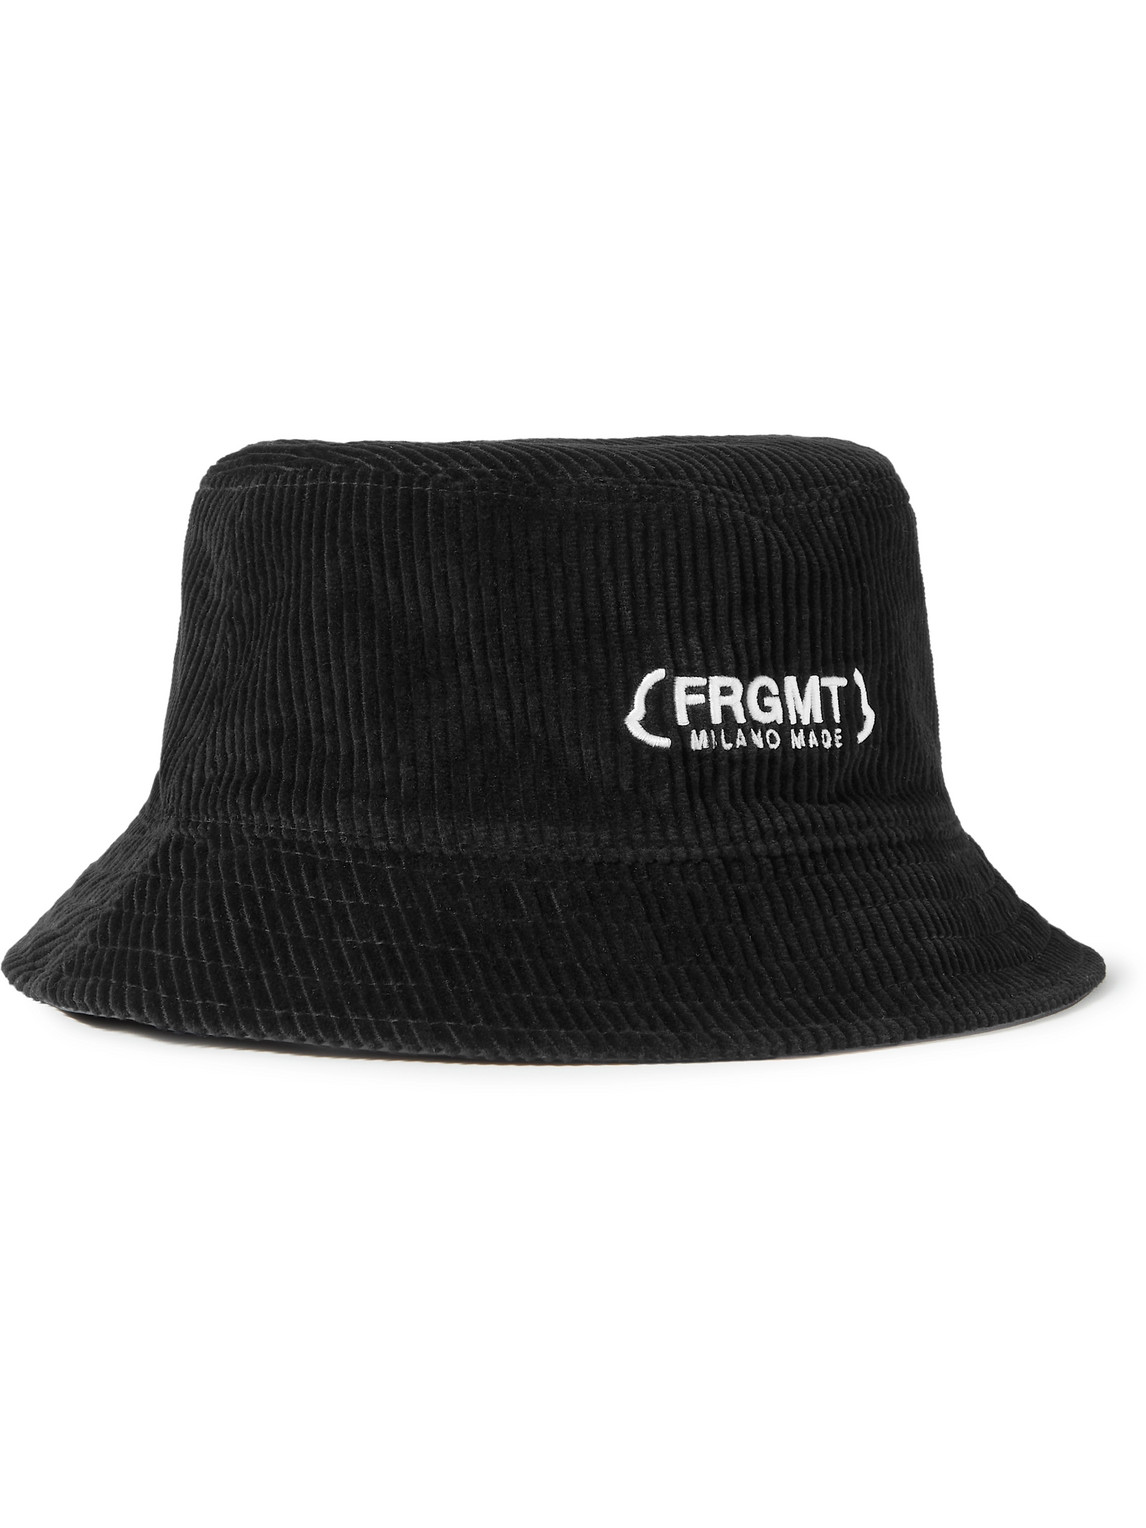 7 Moncler FRGMT Hiroshi Fujiwara Reversible Cotton-Corduroy and Shell Bucket Hat